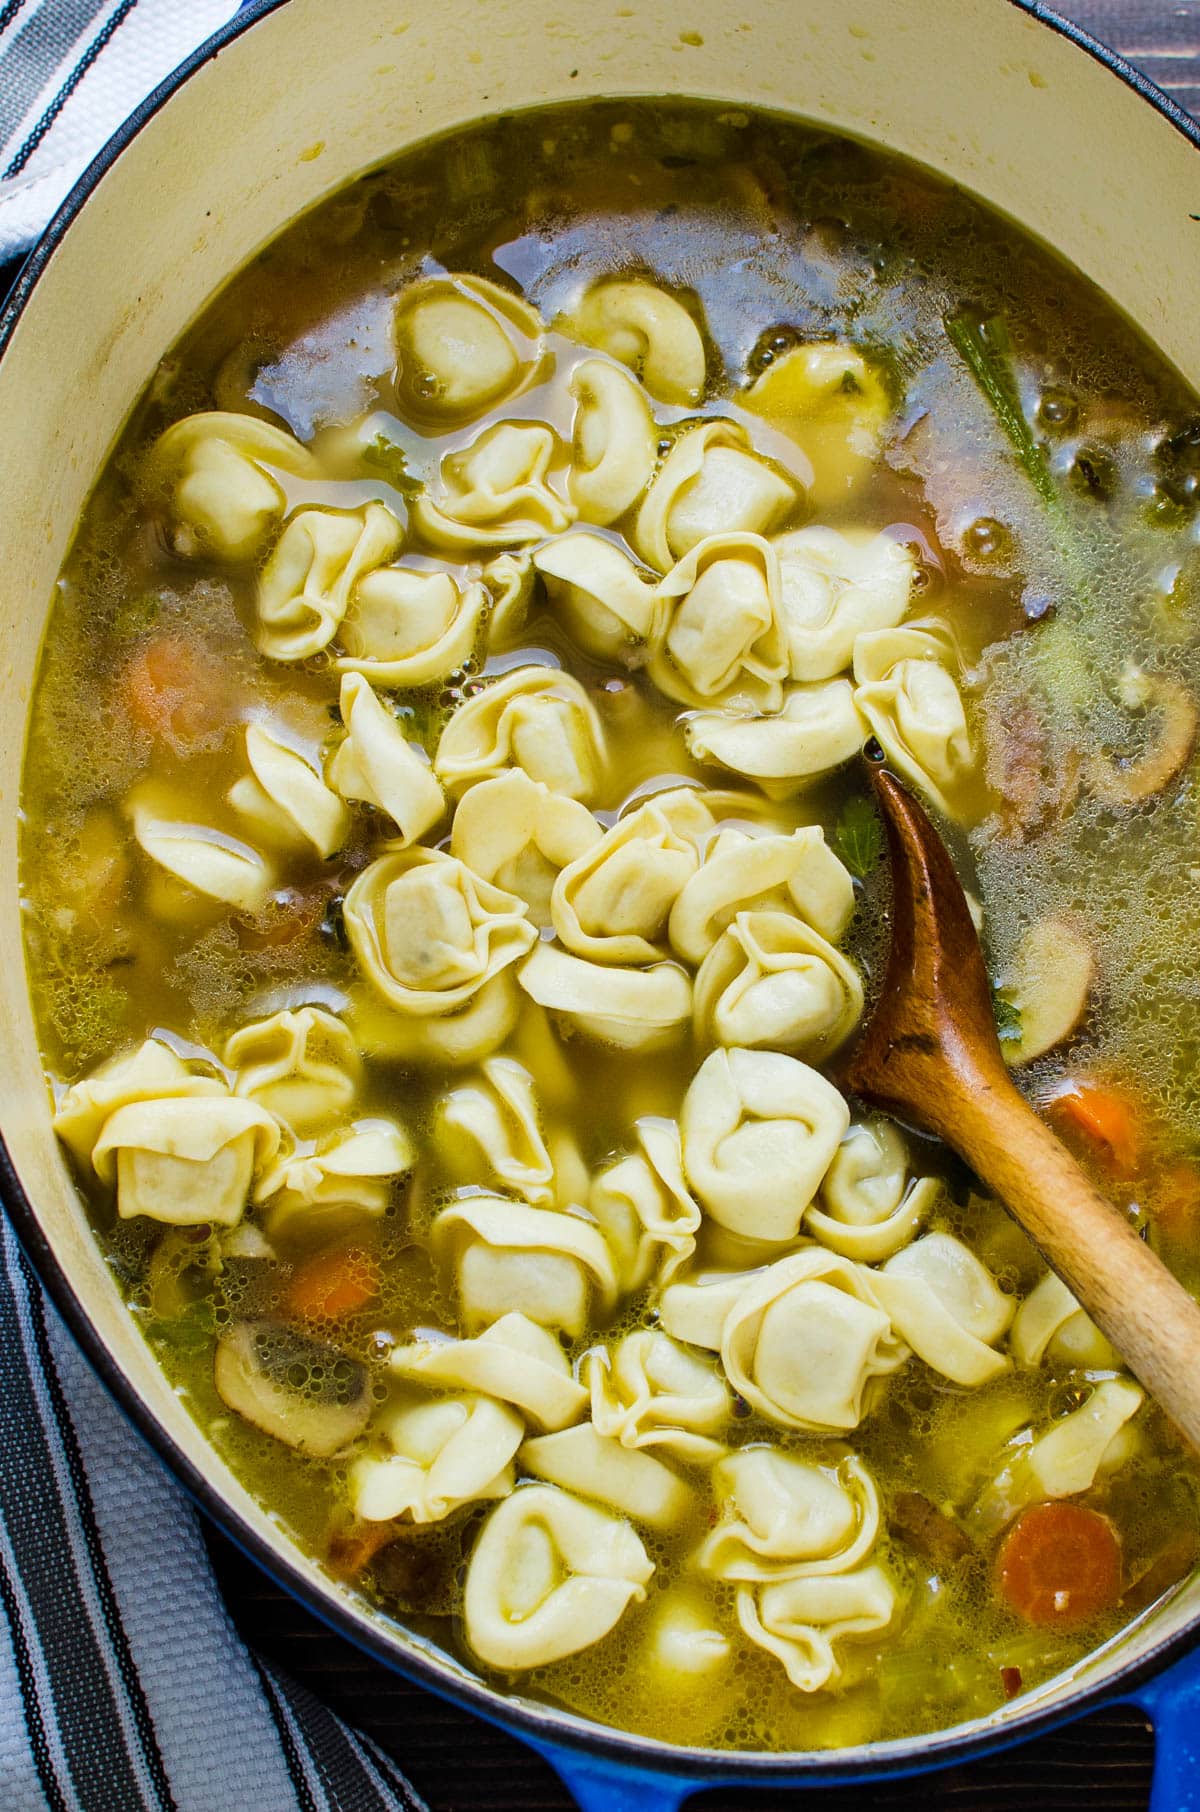 adding tortellini pasta to the soup.